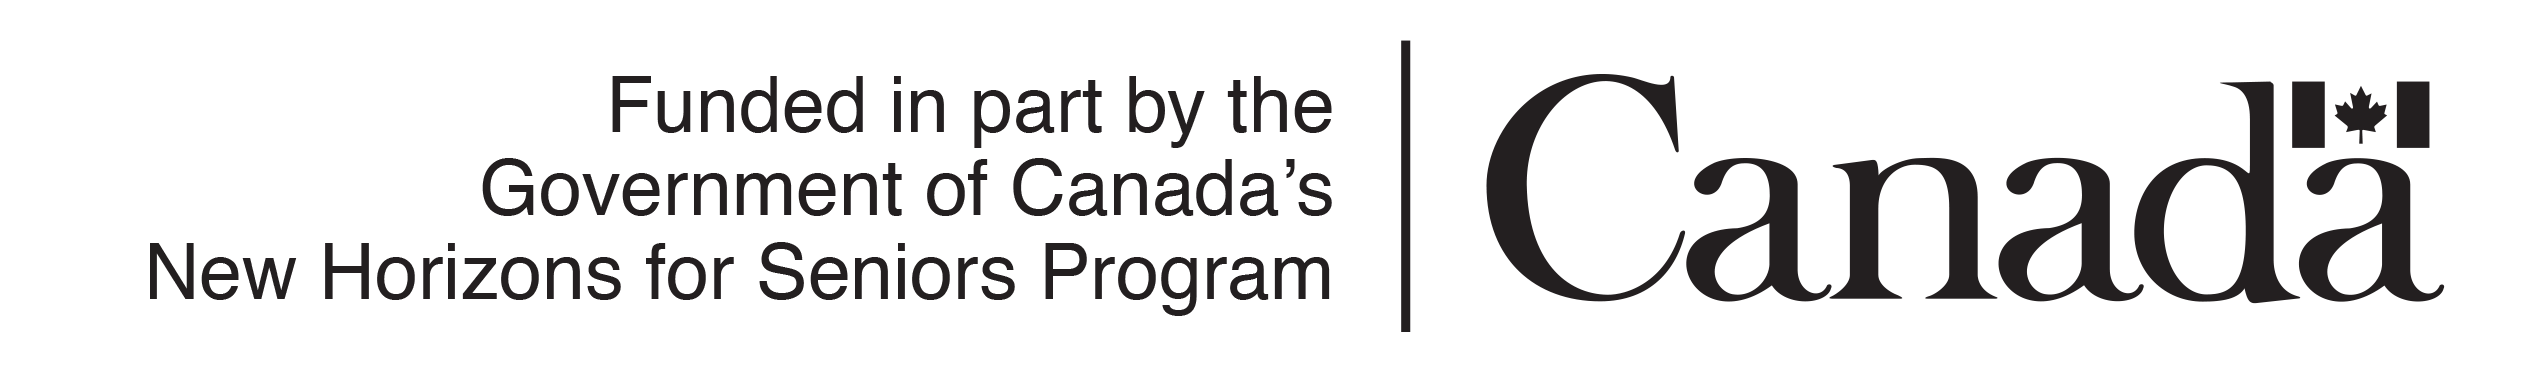 Service Canada Logo